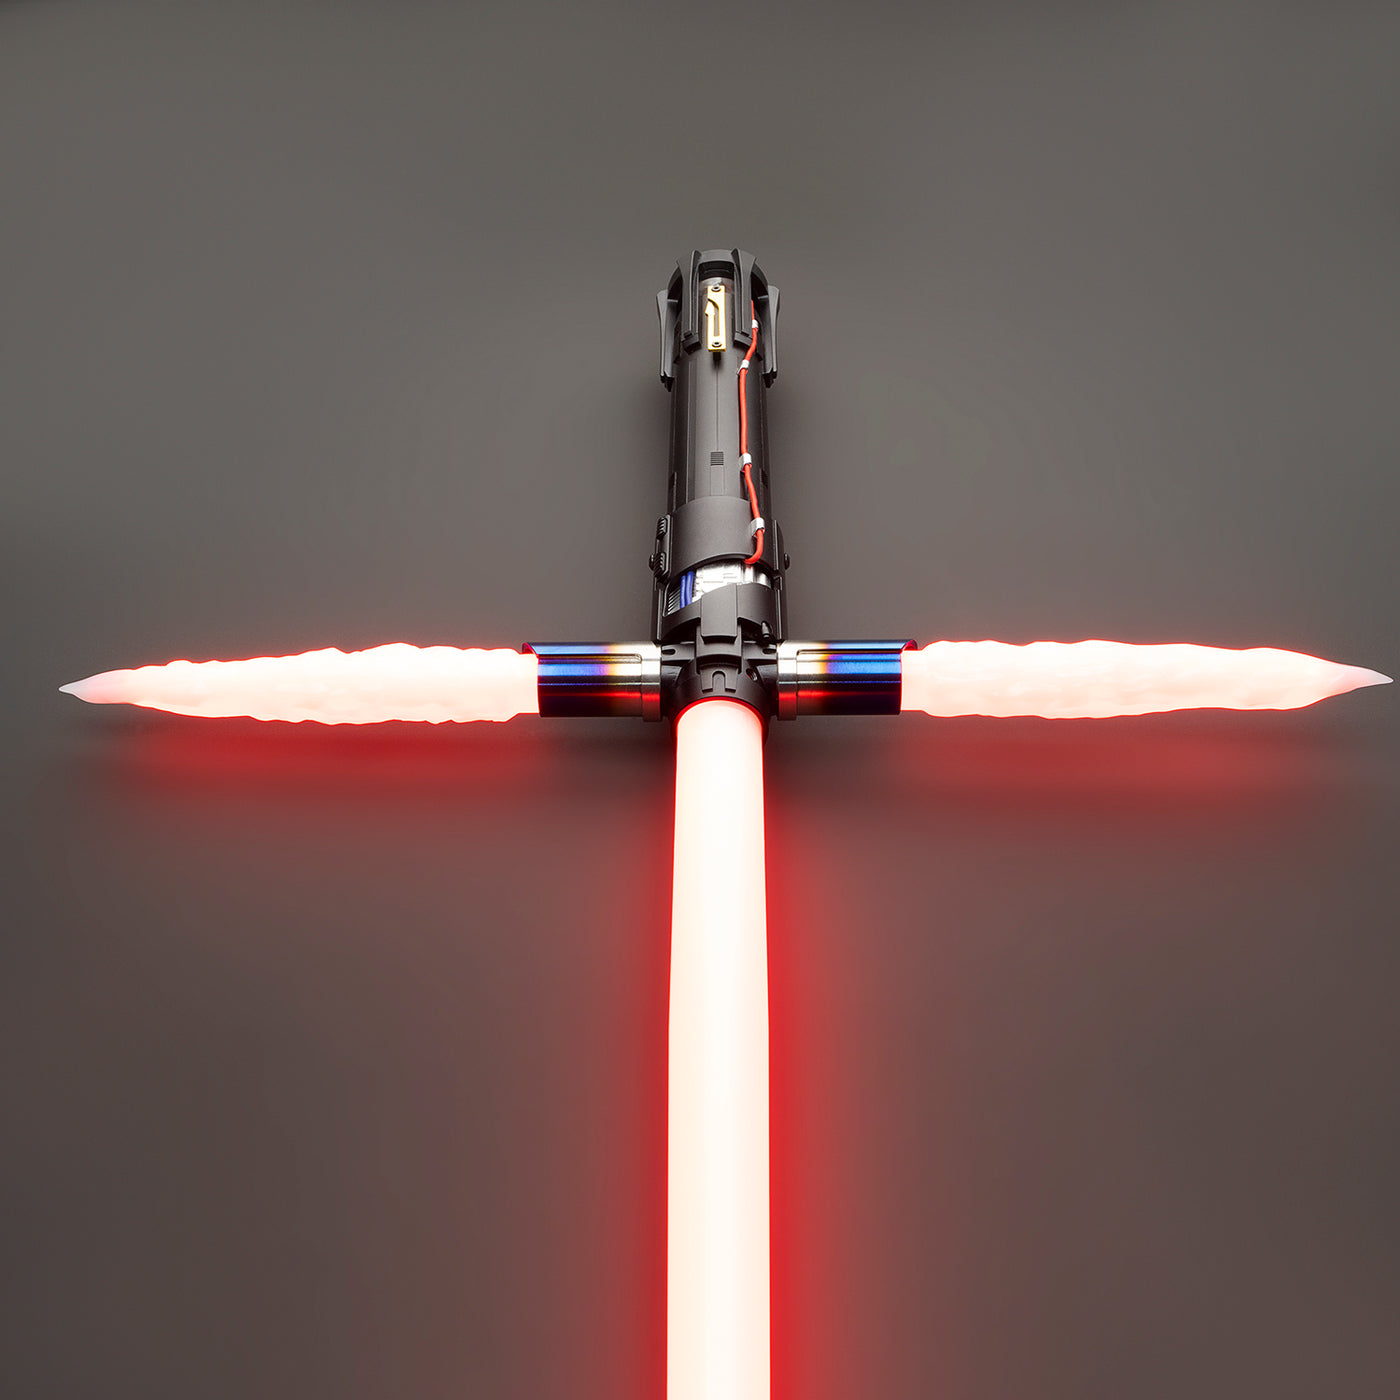 Crossguard - KenJo Sabers - Star Wars Lightsaber replica Jedi Sith - Best sabershop Europe - Nederland light sabers kopen -